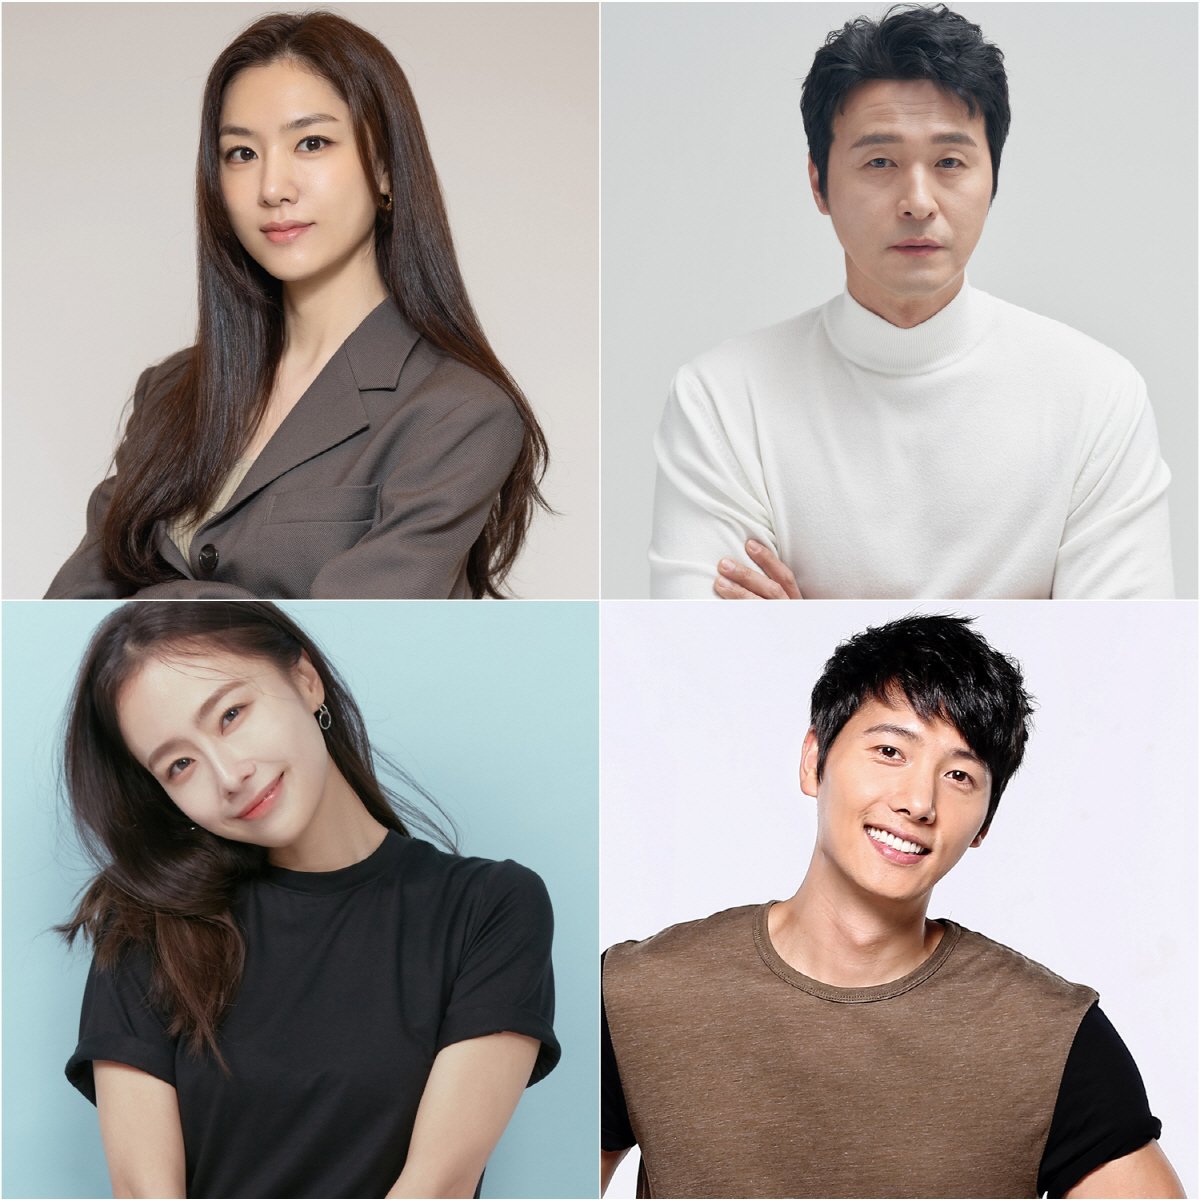 TV Chosun drama #RedBalloon has confirmed its cast-line up #SeoJiHye #LeeSeongJae #HongSooHyun & #LeeSangWoo

It is confirmed to air on December 2022.